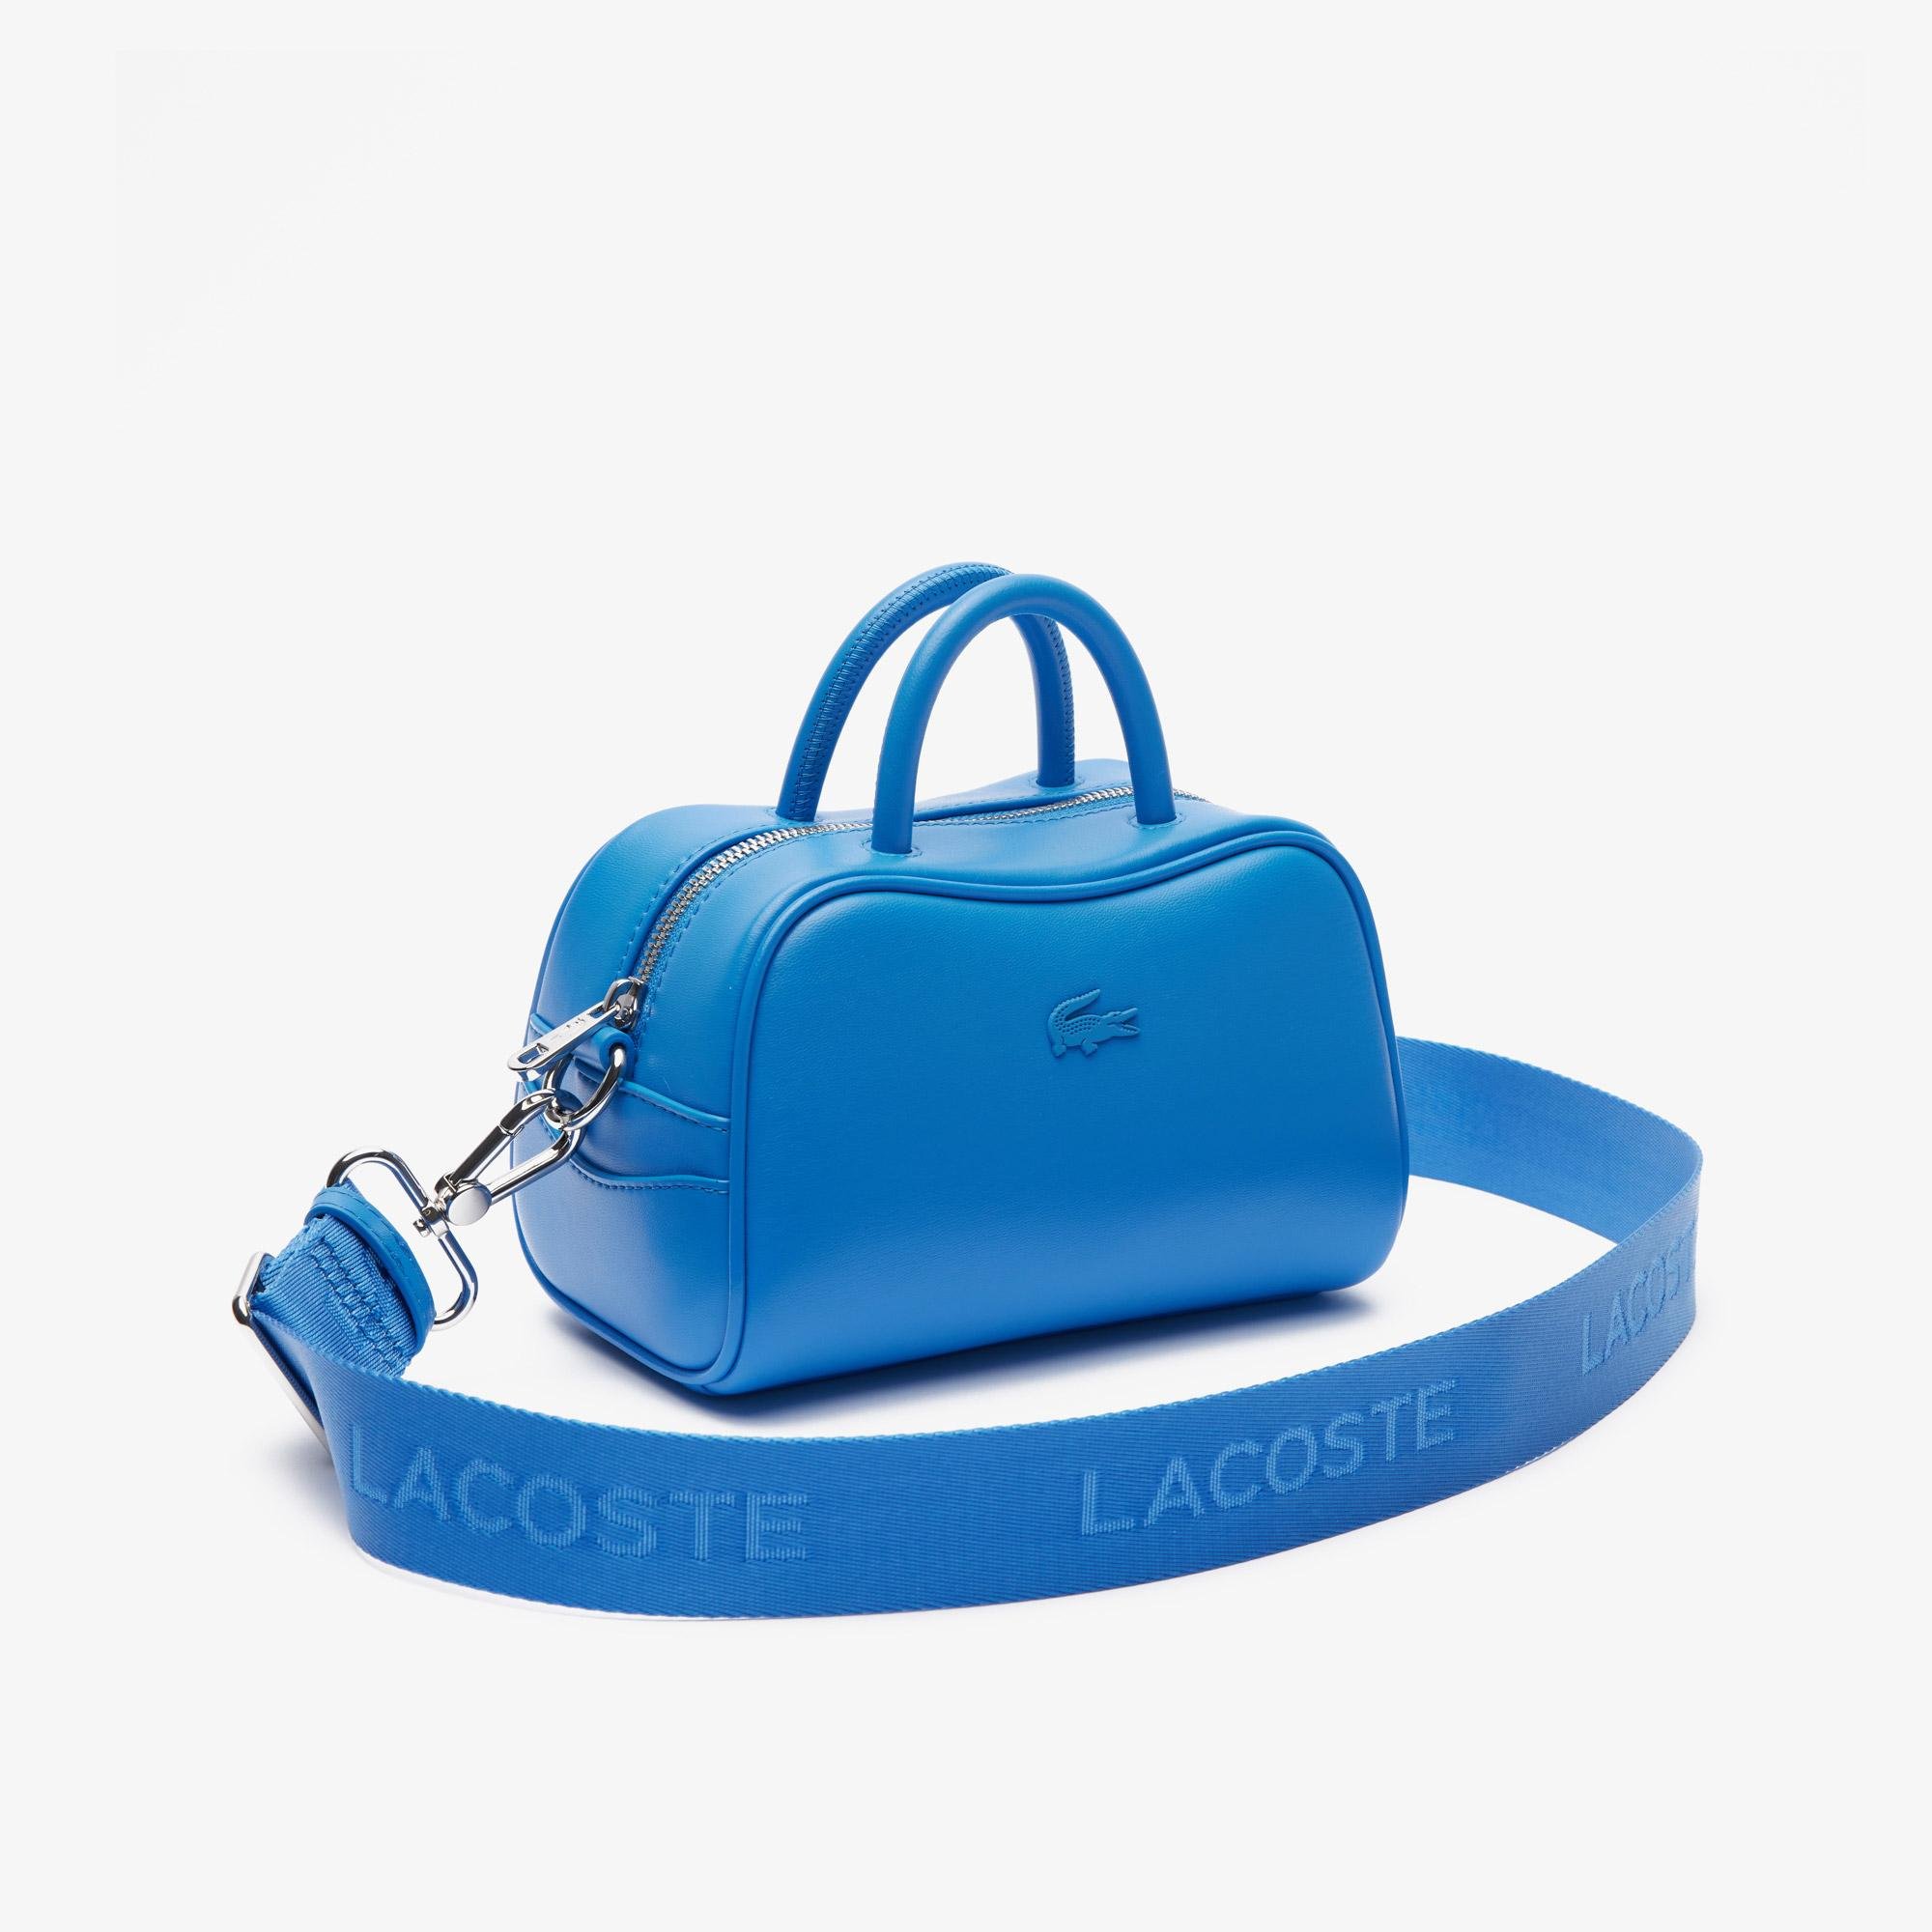 Lacoste Women's Mini Lora Leather Bag